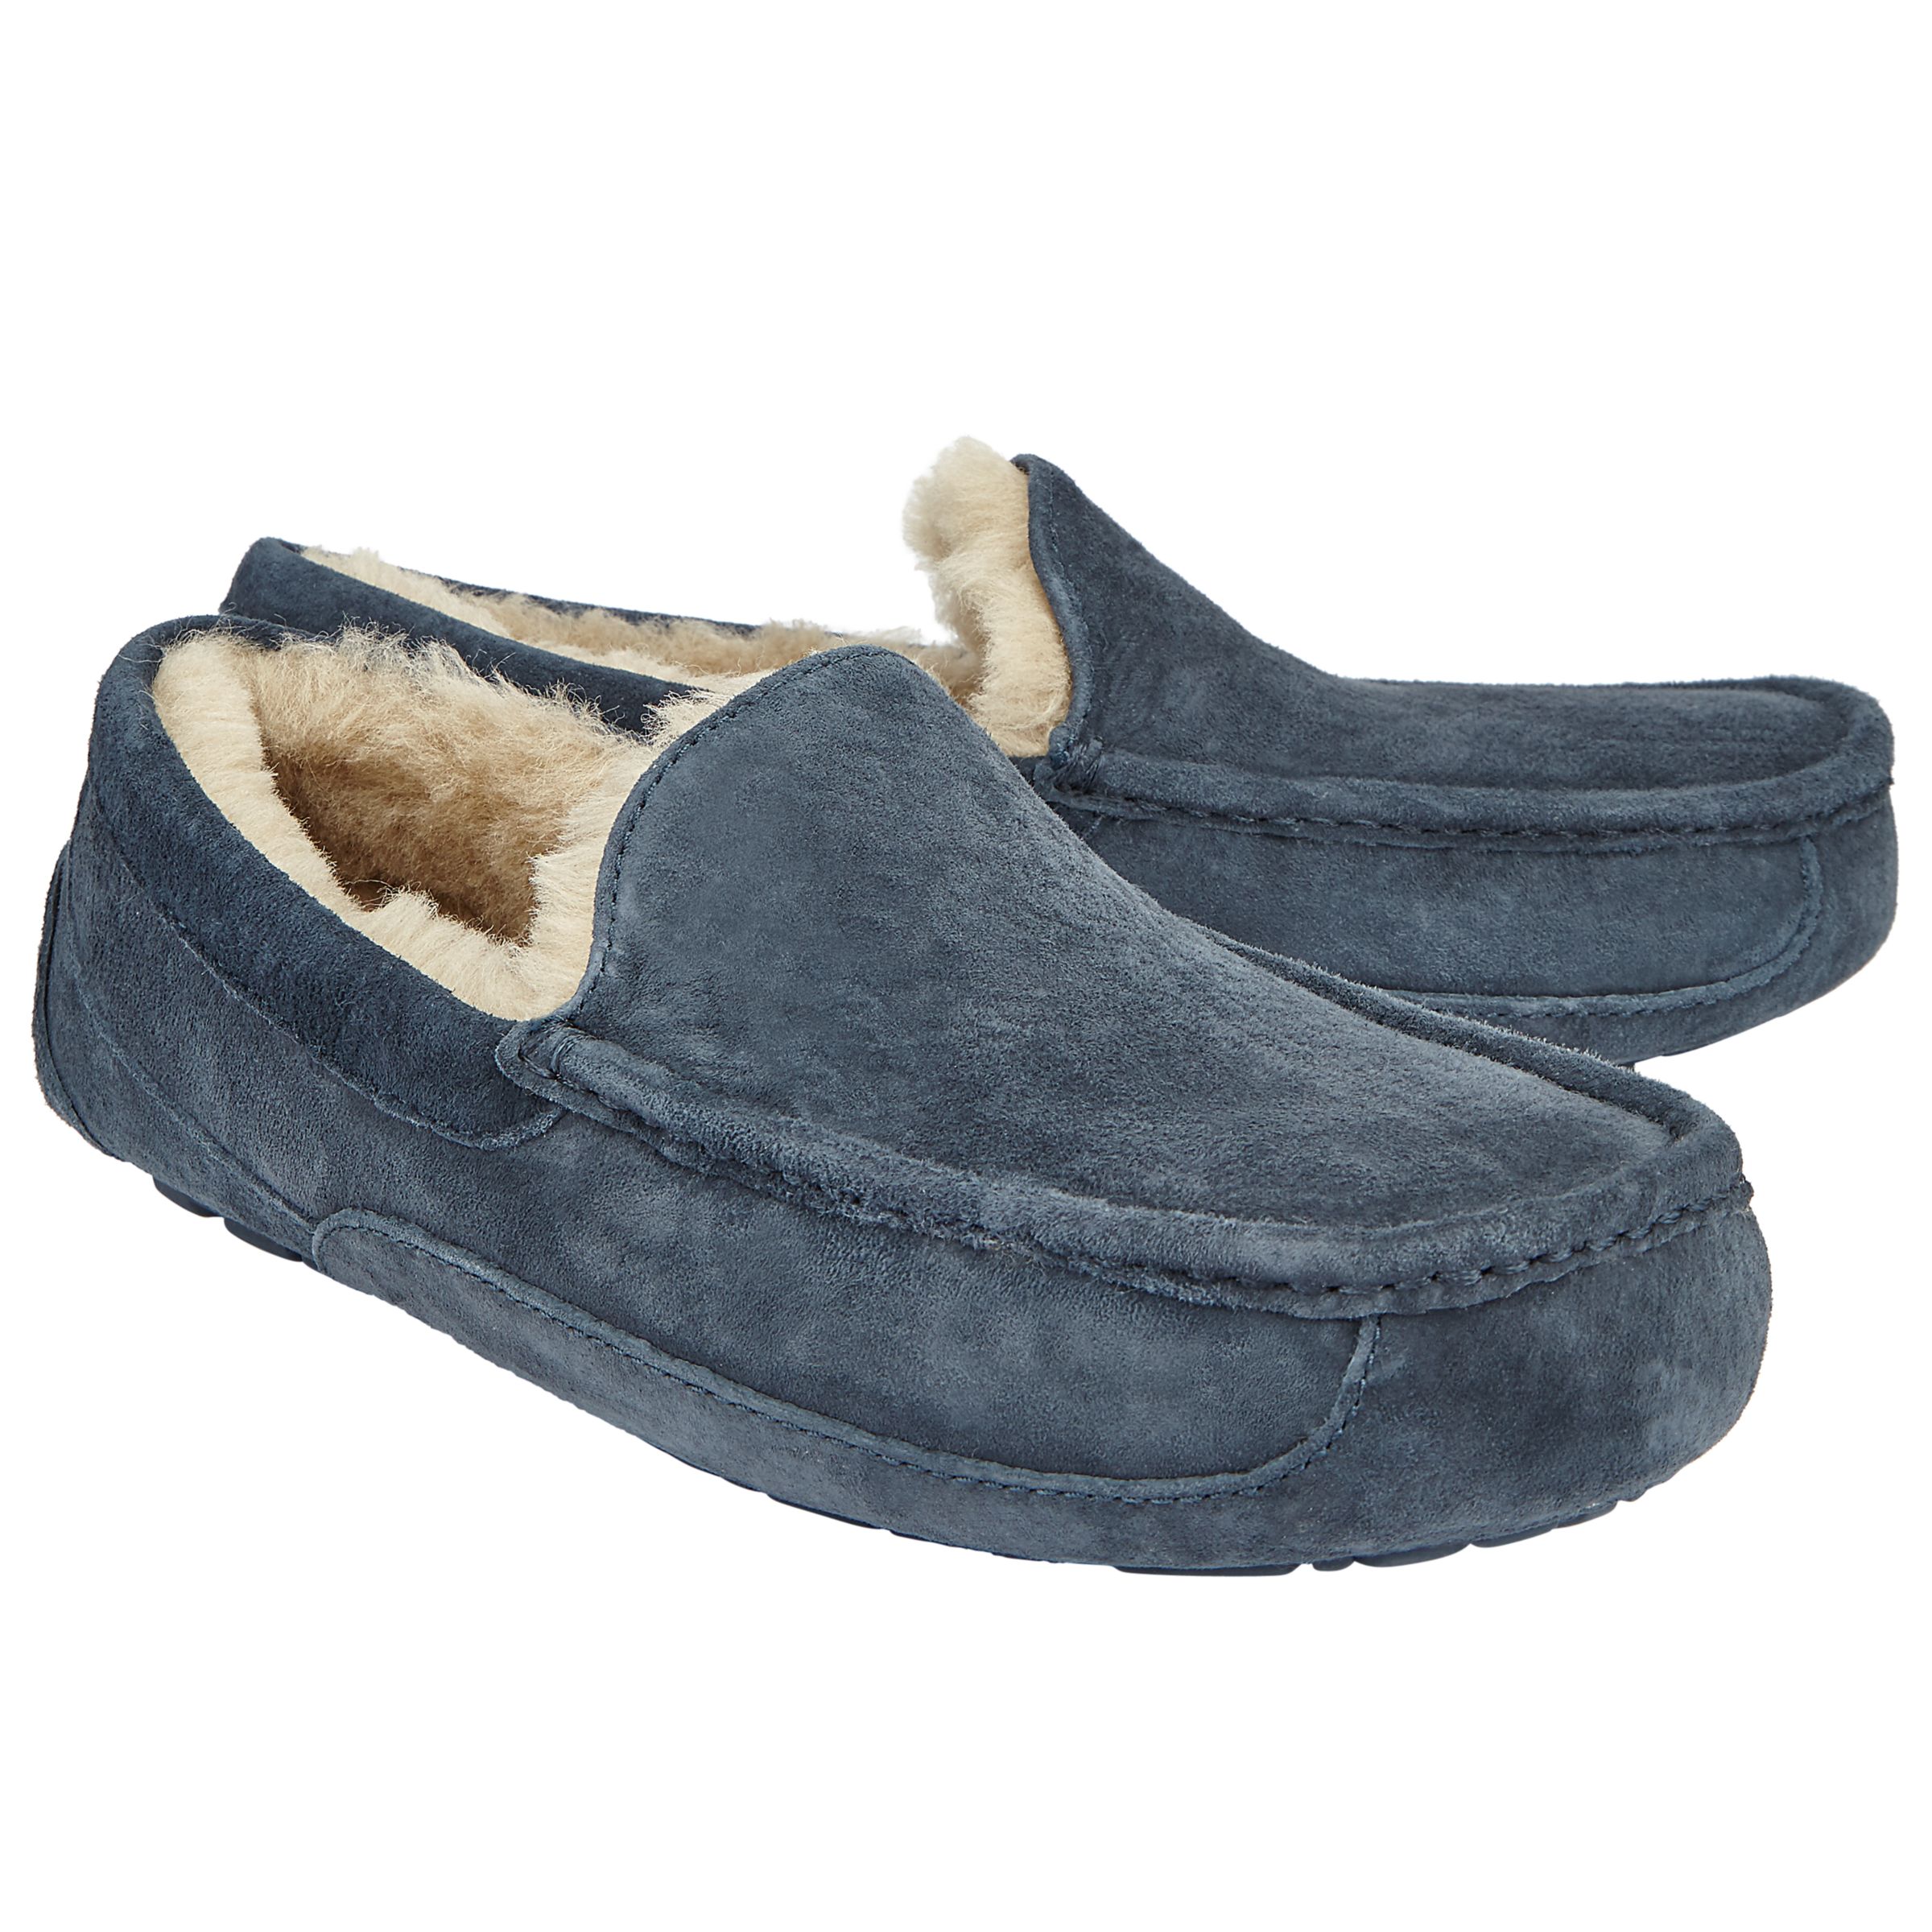 ugg slippers navy blue